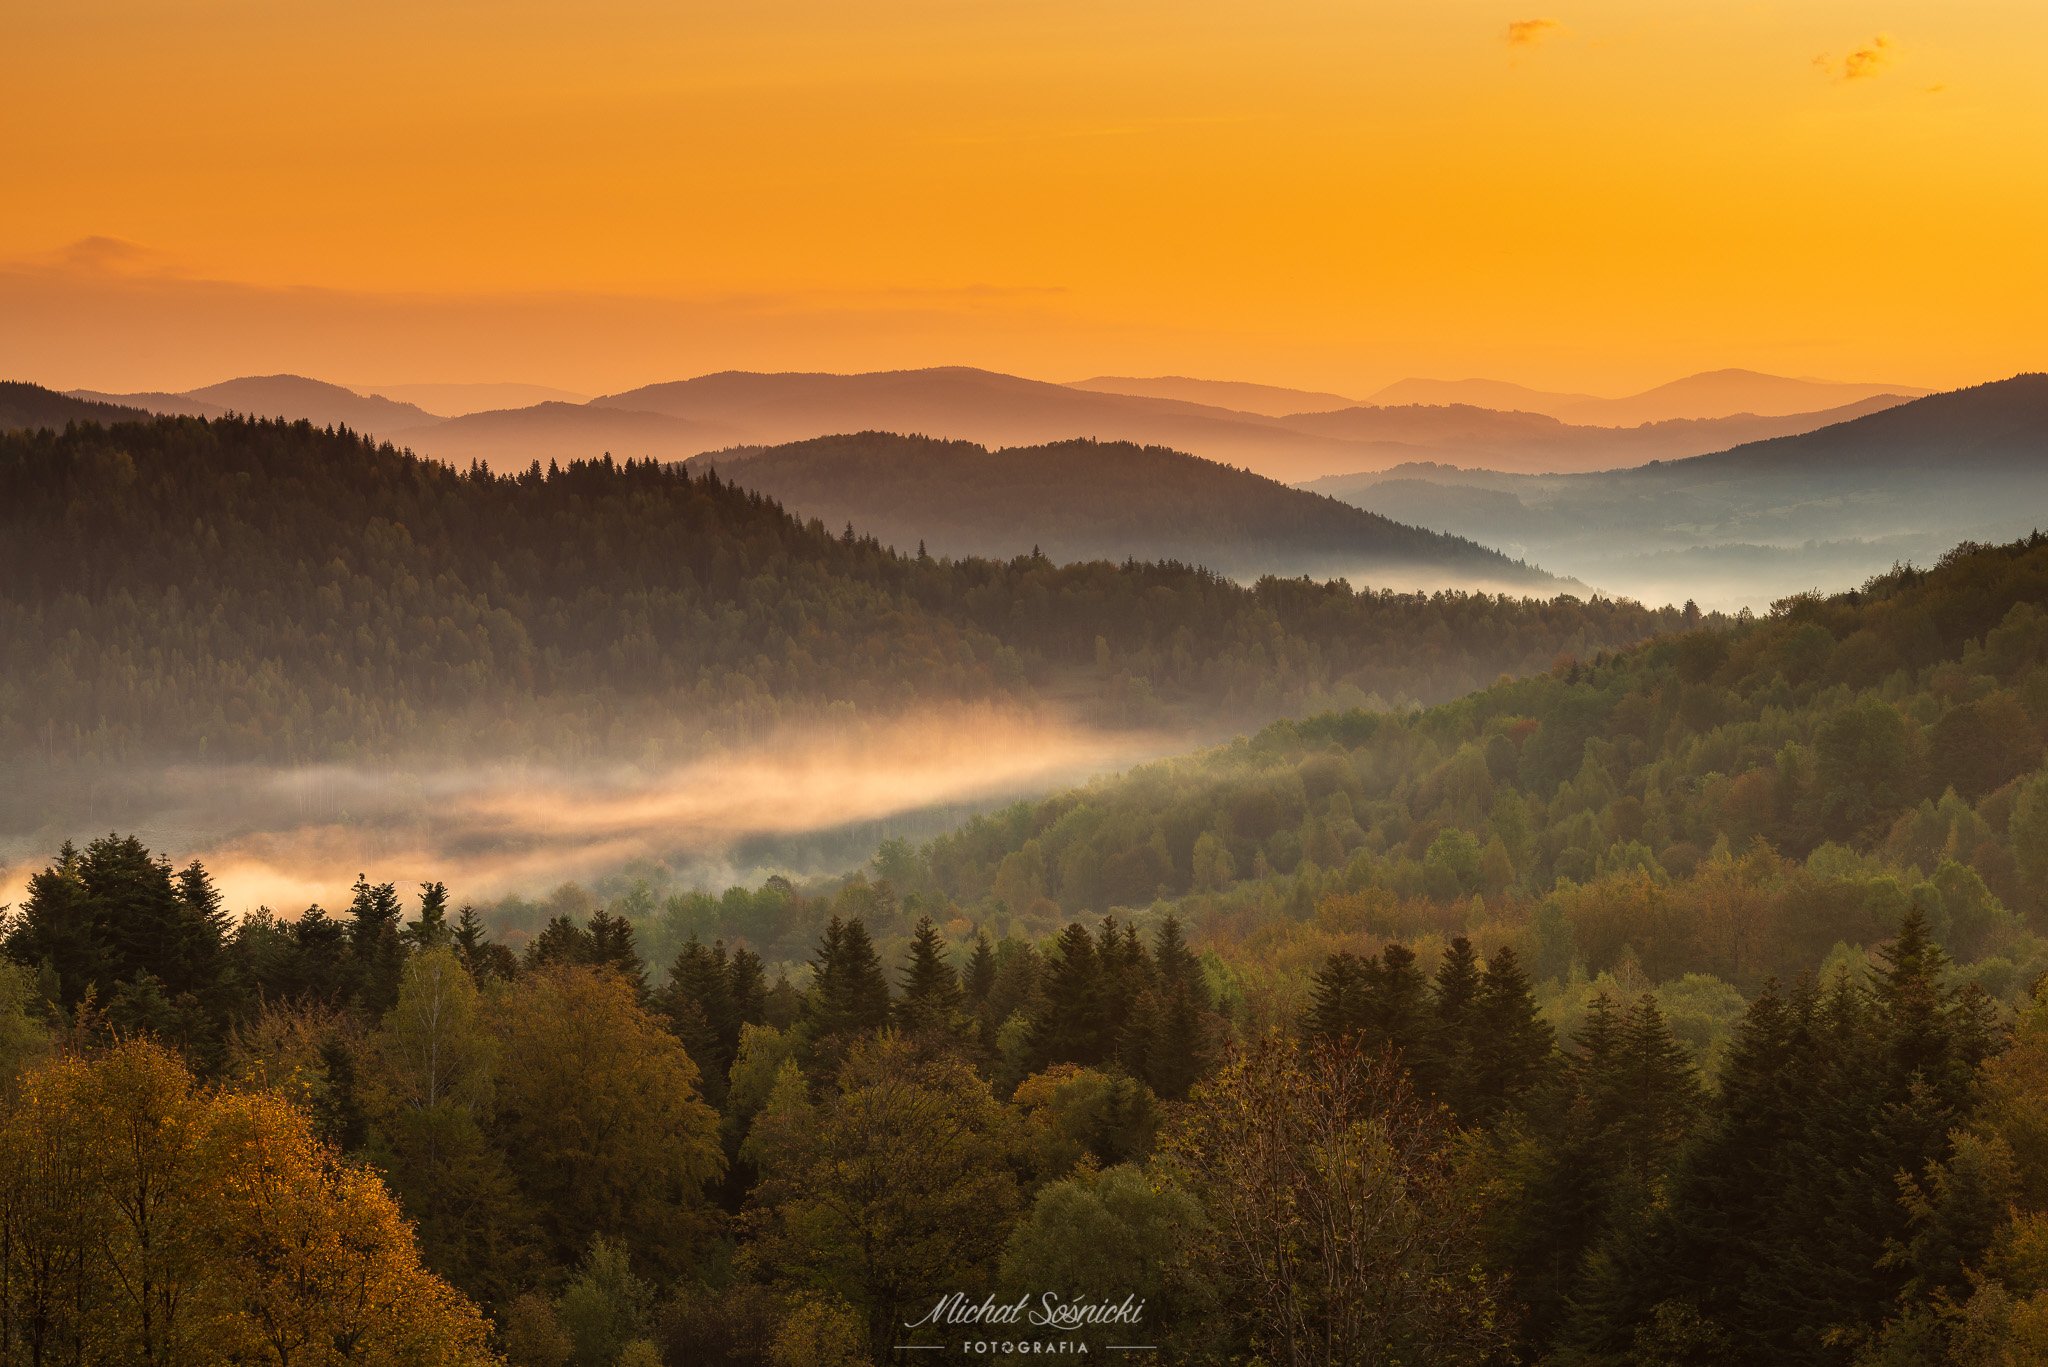 #poland #mountains #sunrise #nature #amazing #benro #pentax #color #sky #autumn, Michał Sośnicki